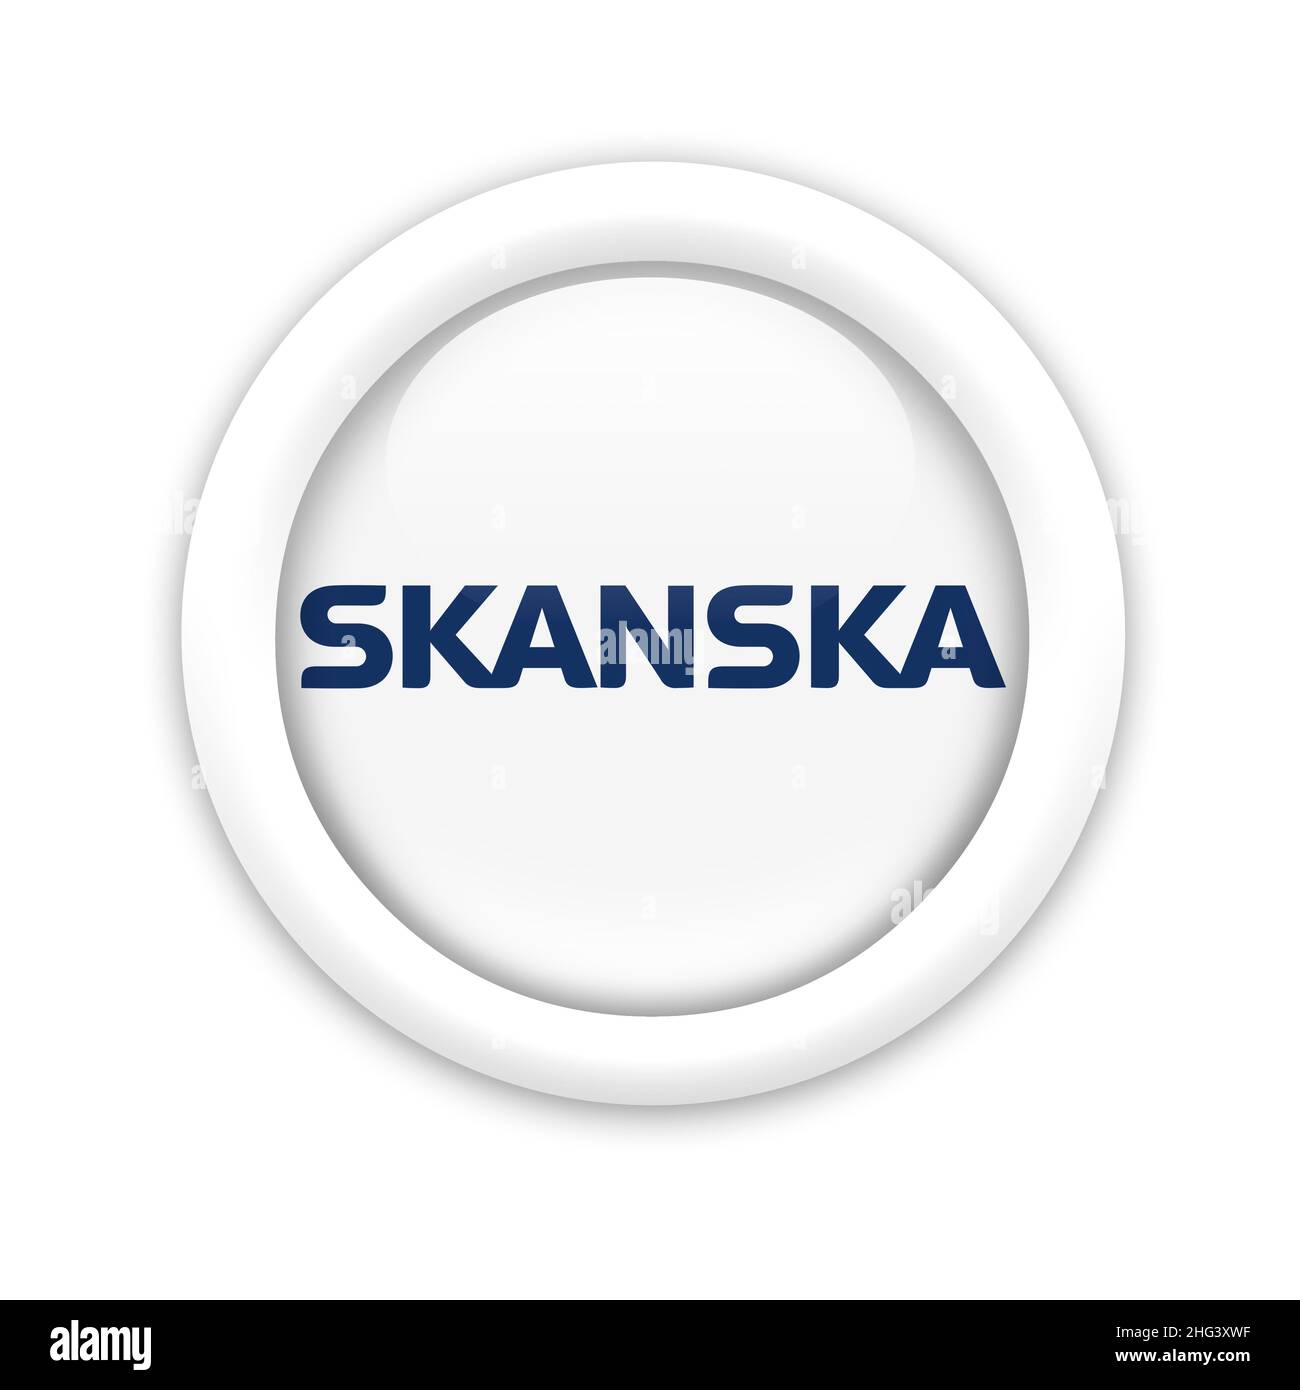 Skanska logo Stock Photo